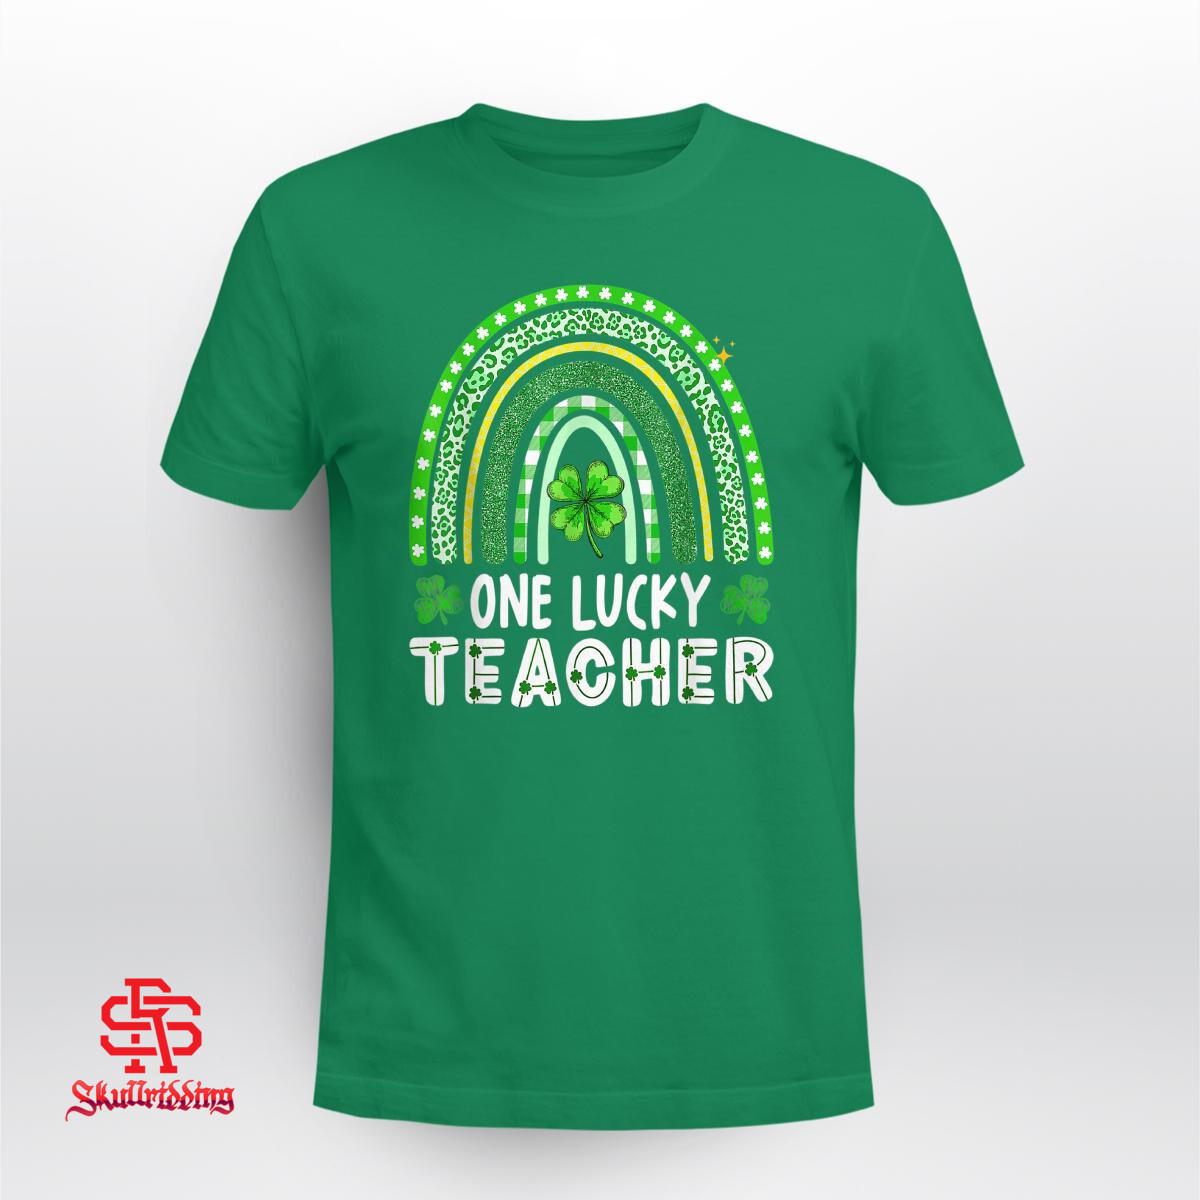 St Teacher - Rainbow Skullridding Patrick\'s T-Shirt One Day Lucky